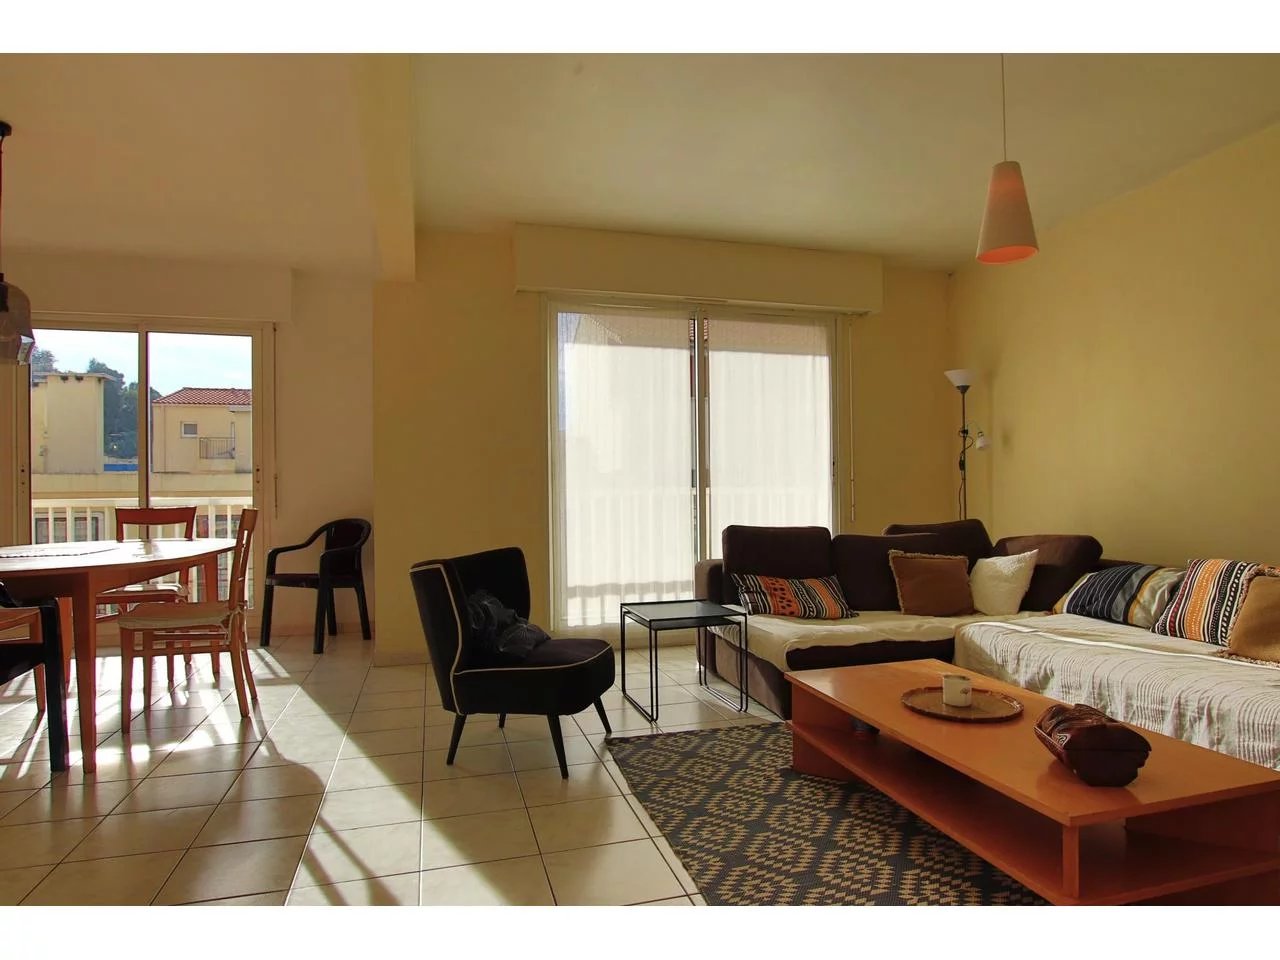 Appartement  6 Locali 170m2  In vendita   535 000 €